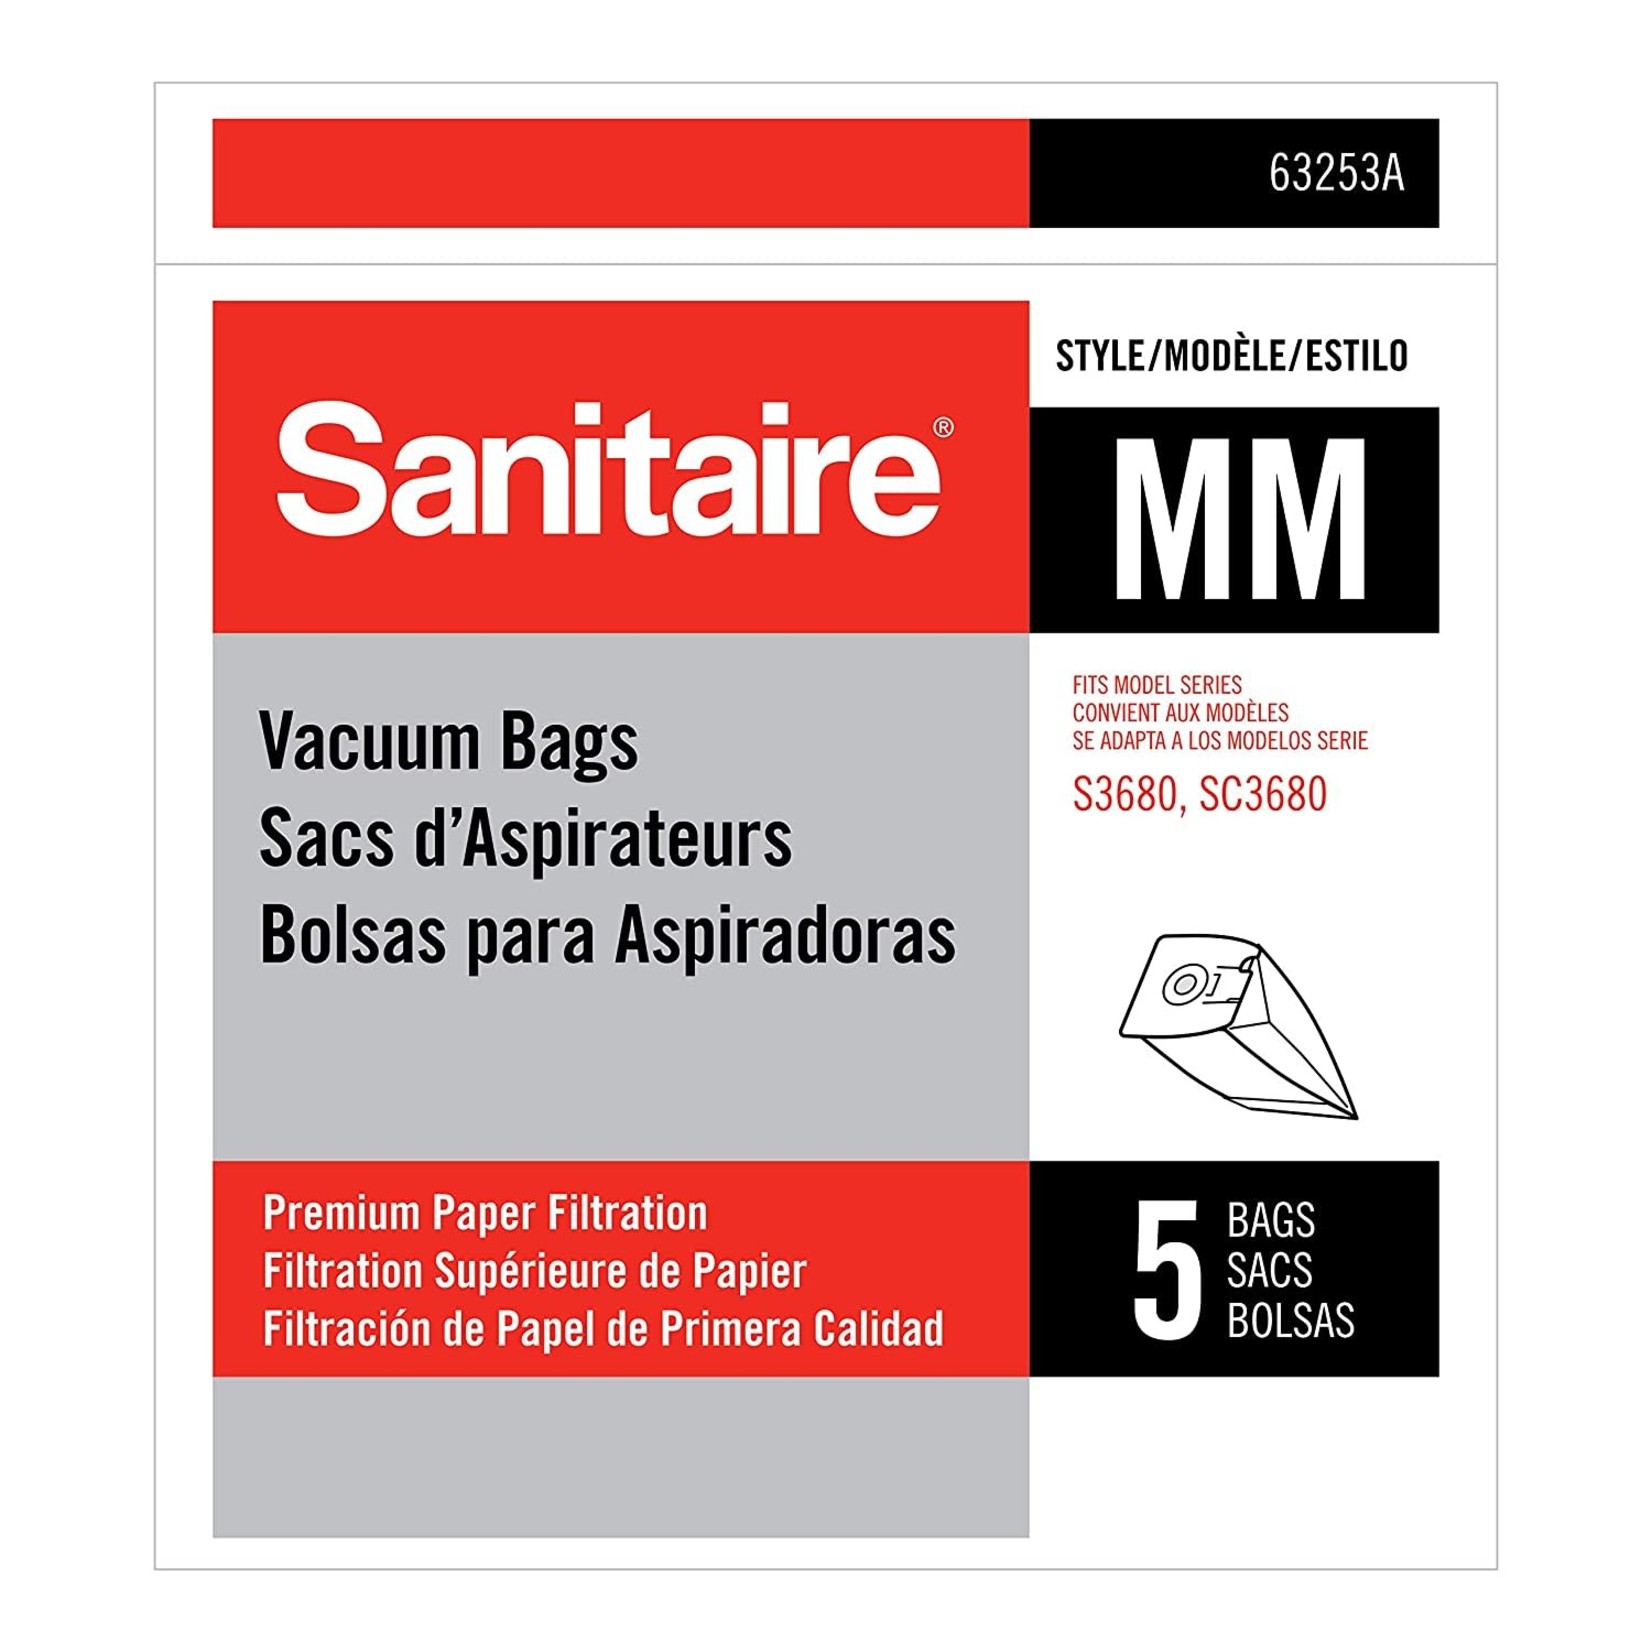 Sanitaire Sanitaire Allergen Style "MM" Bag (5pk)